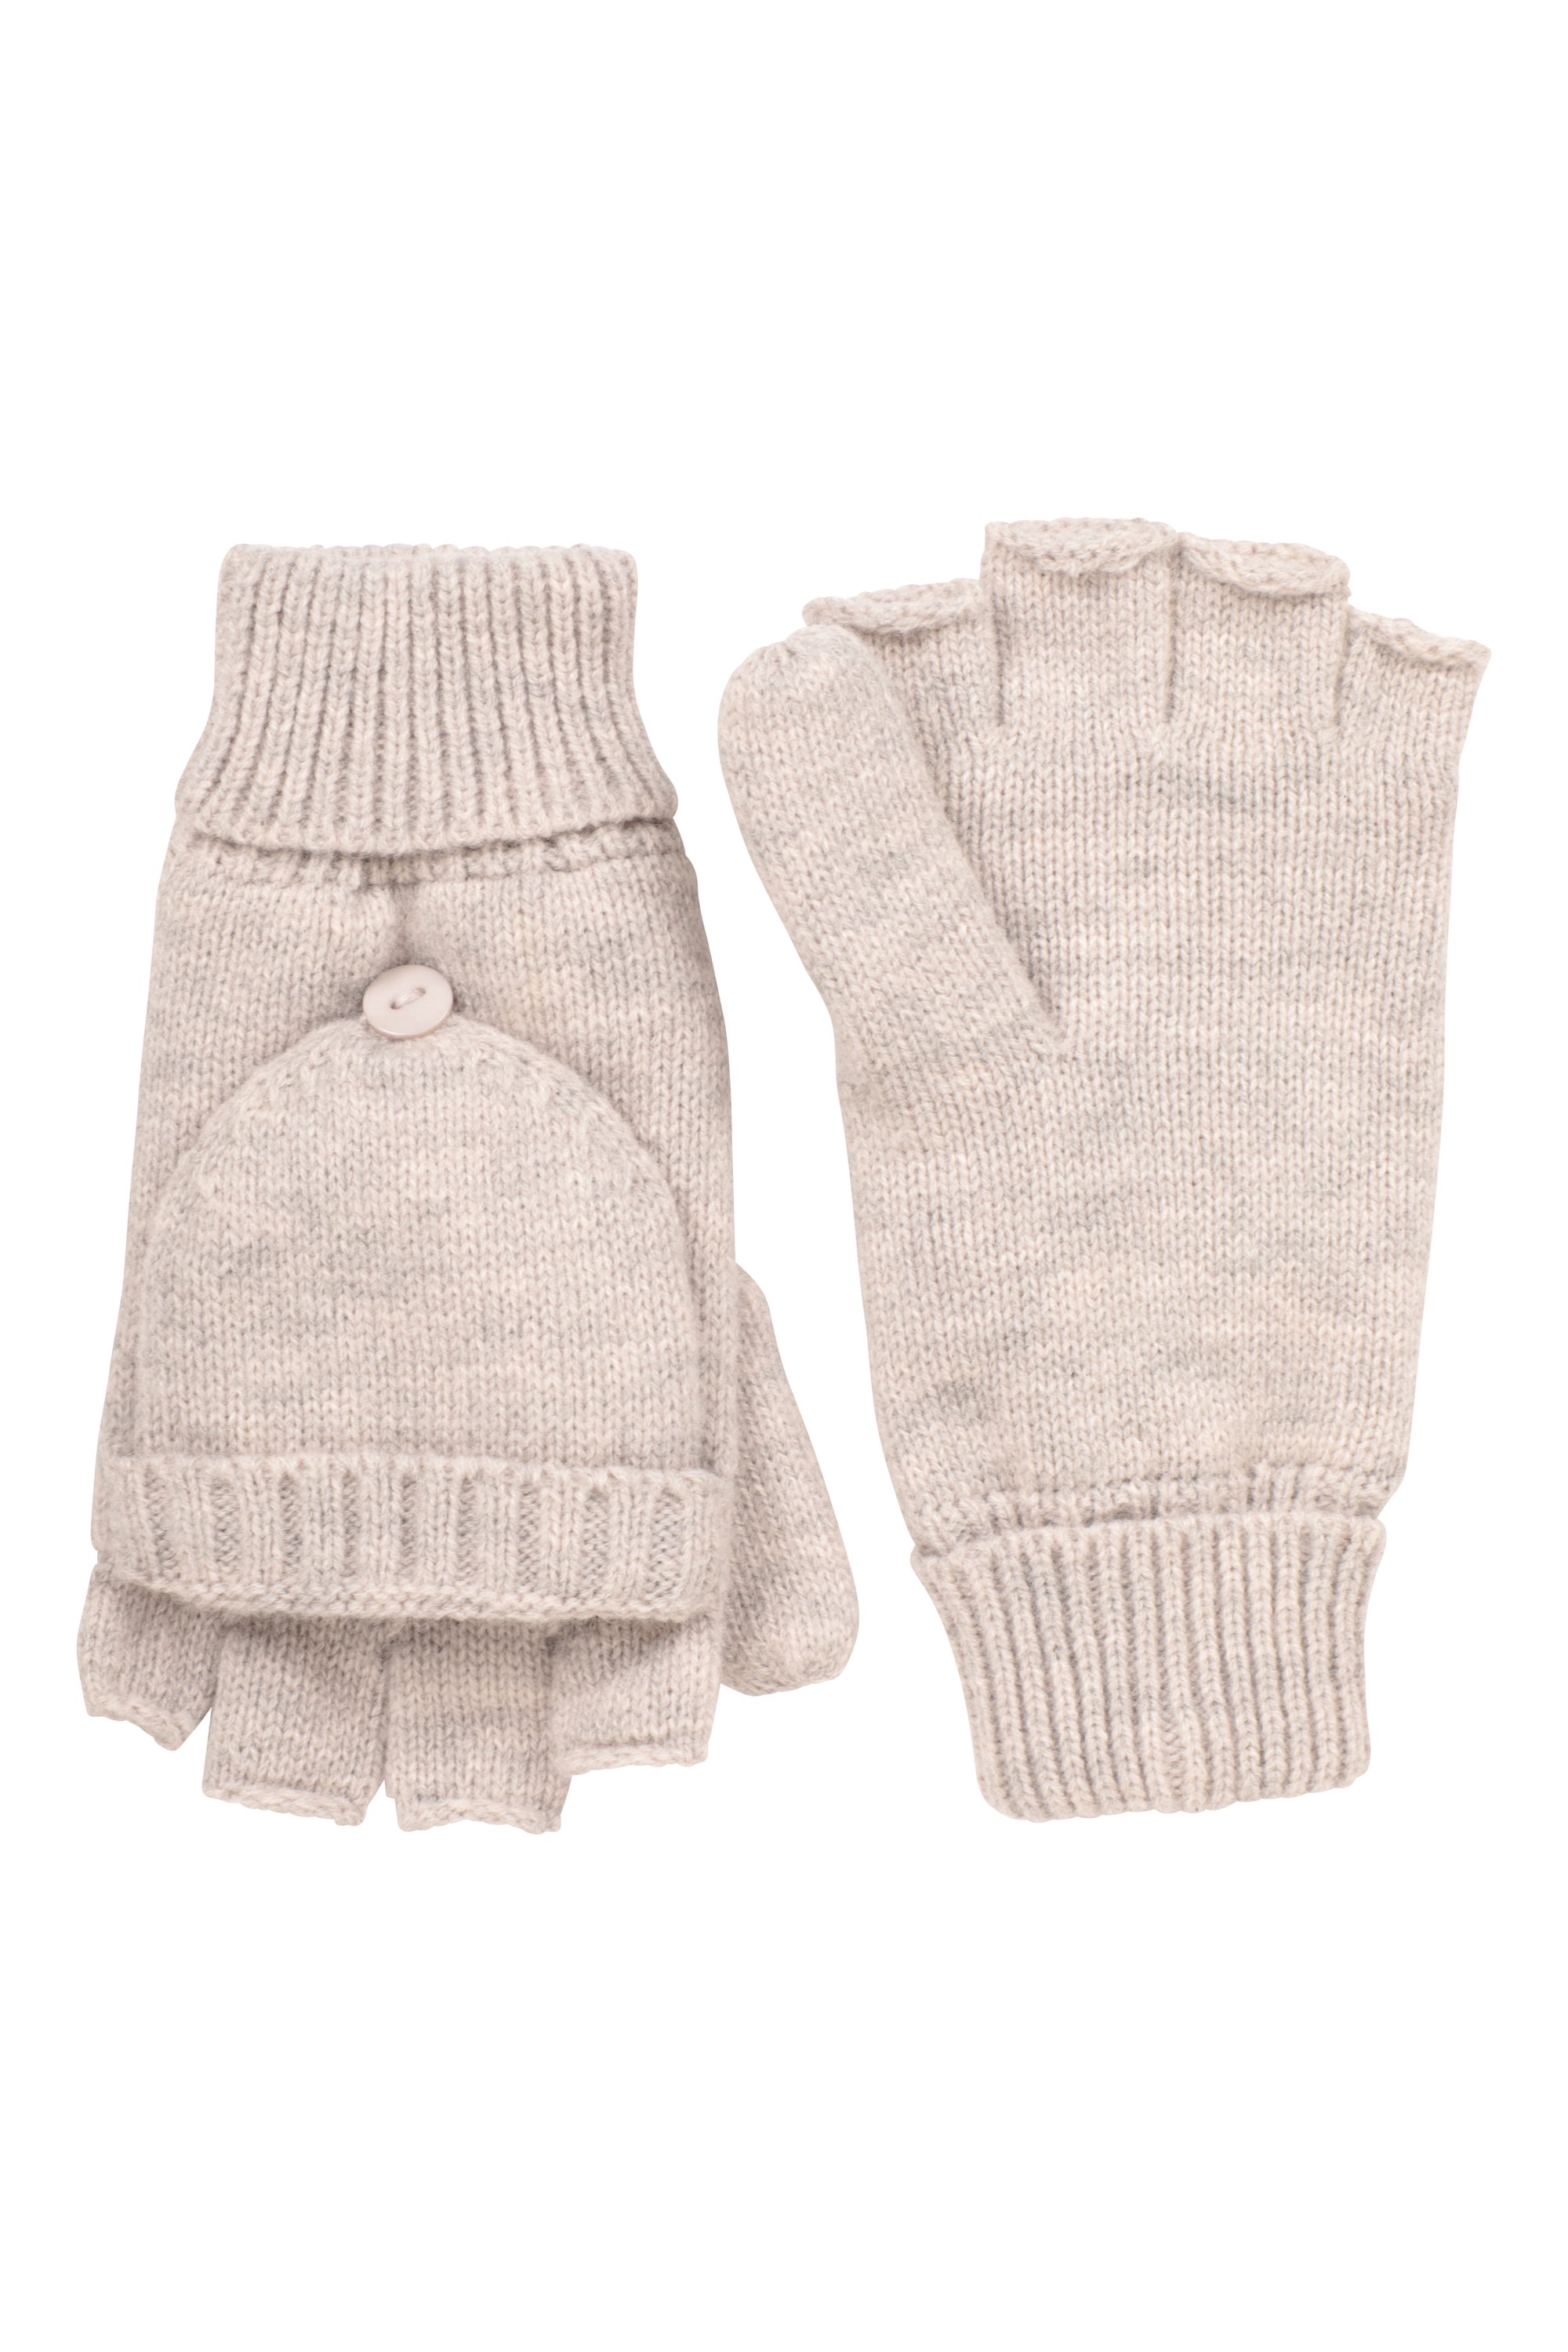 Mountain Warehouse Fingerless Knitted Womens Mitten - Beige | Size One